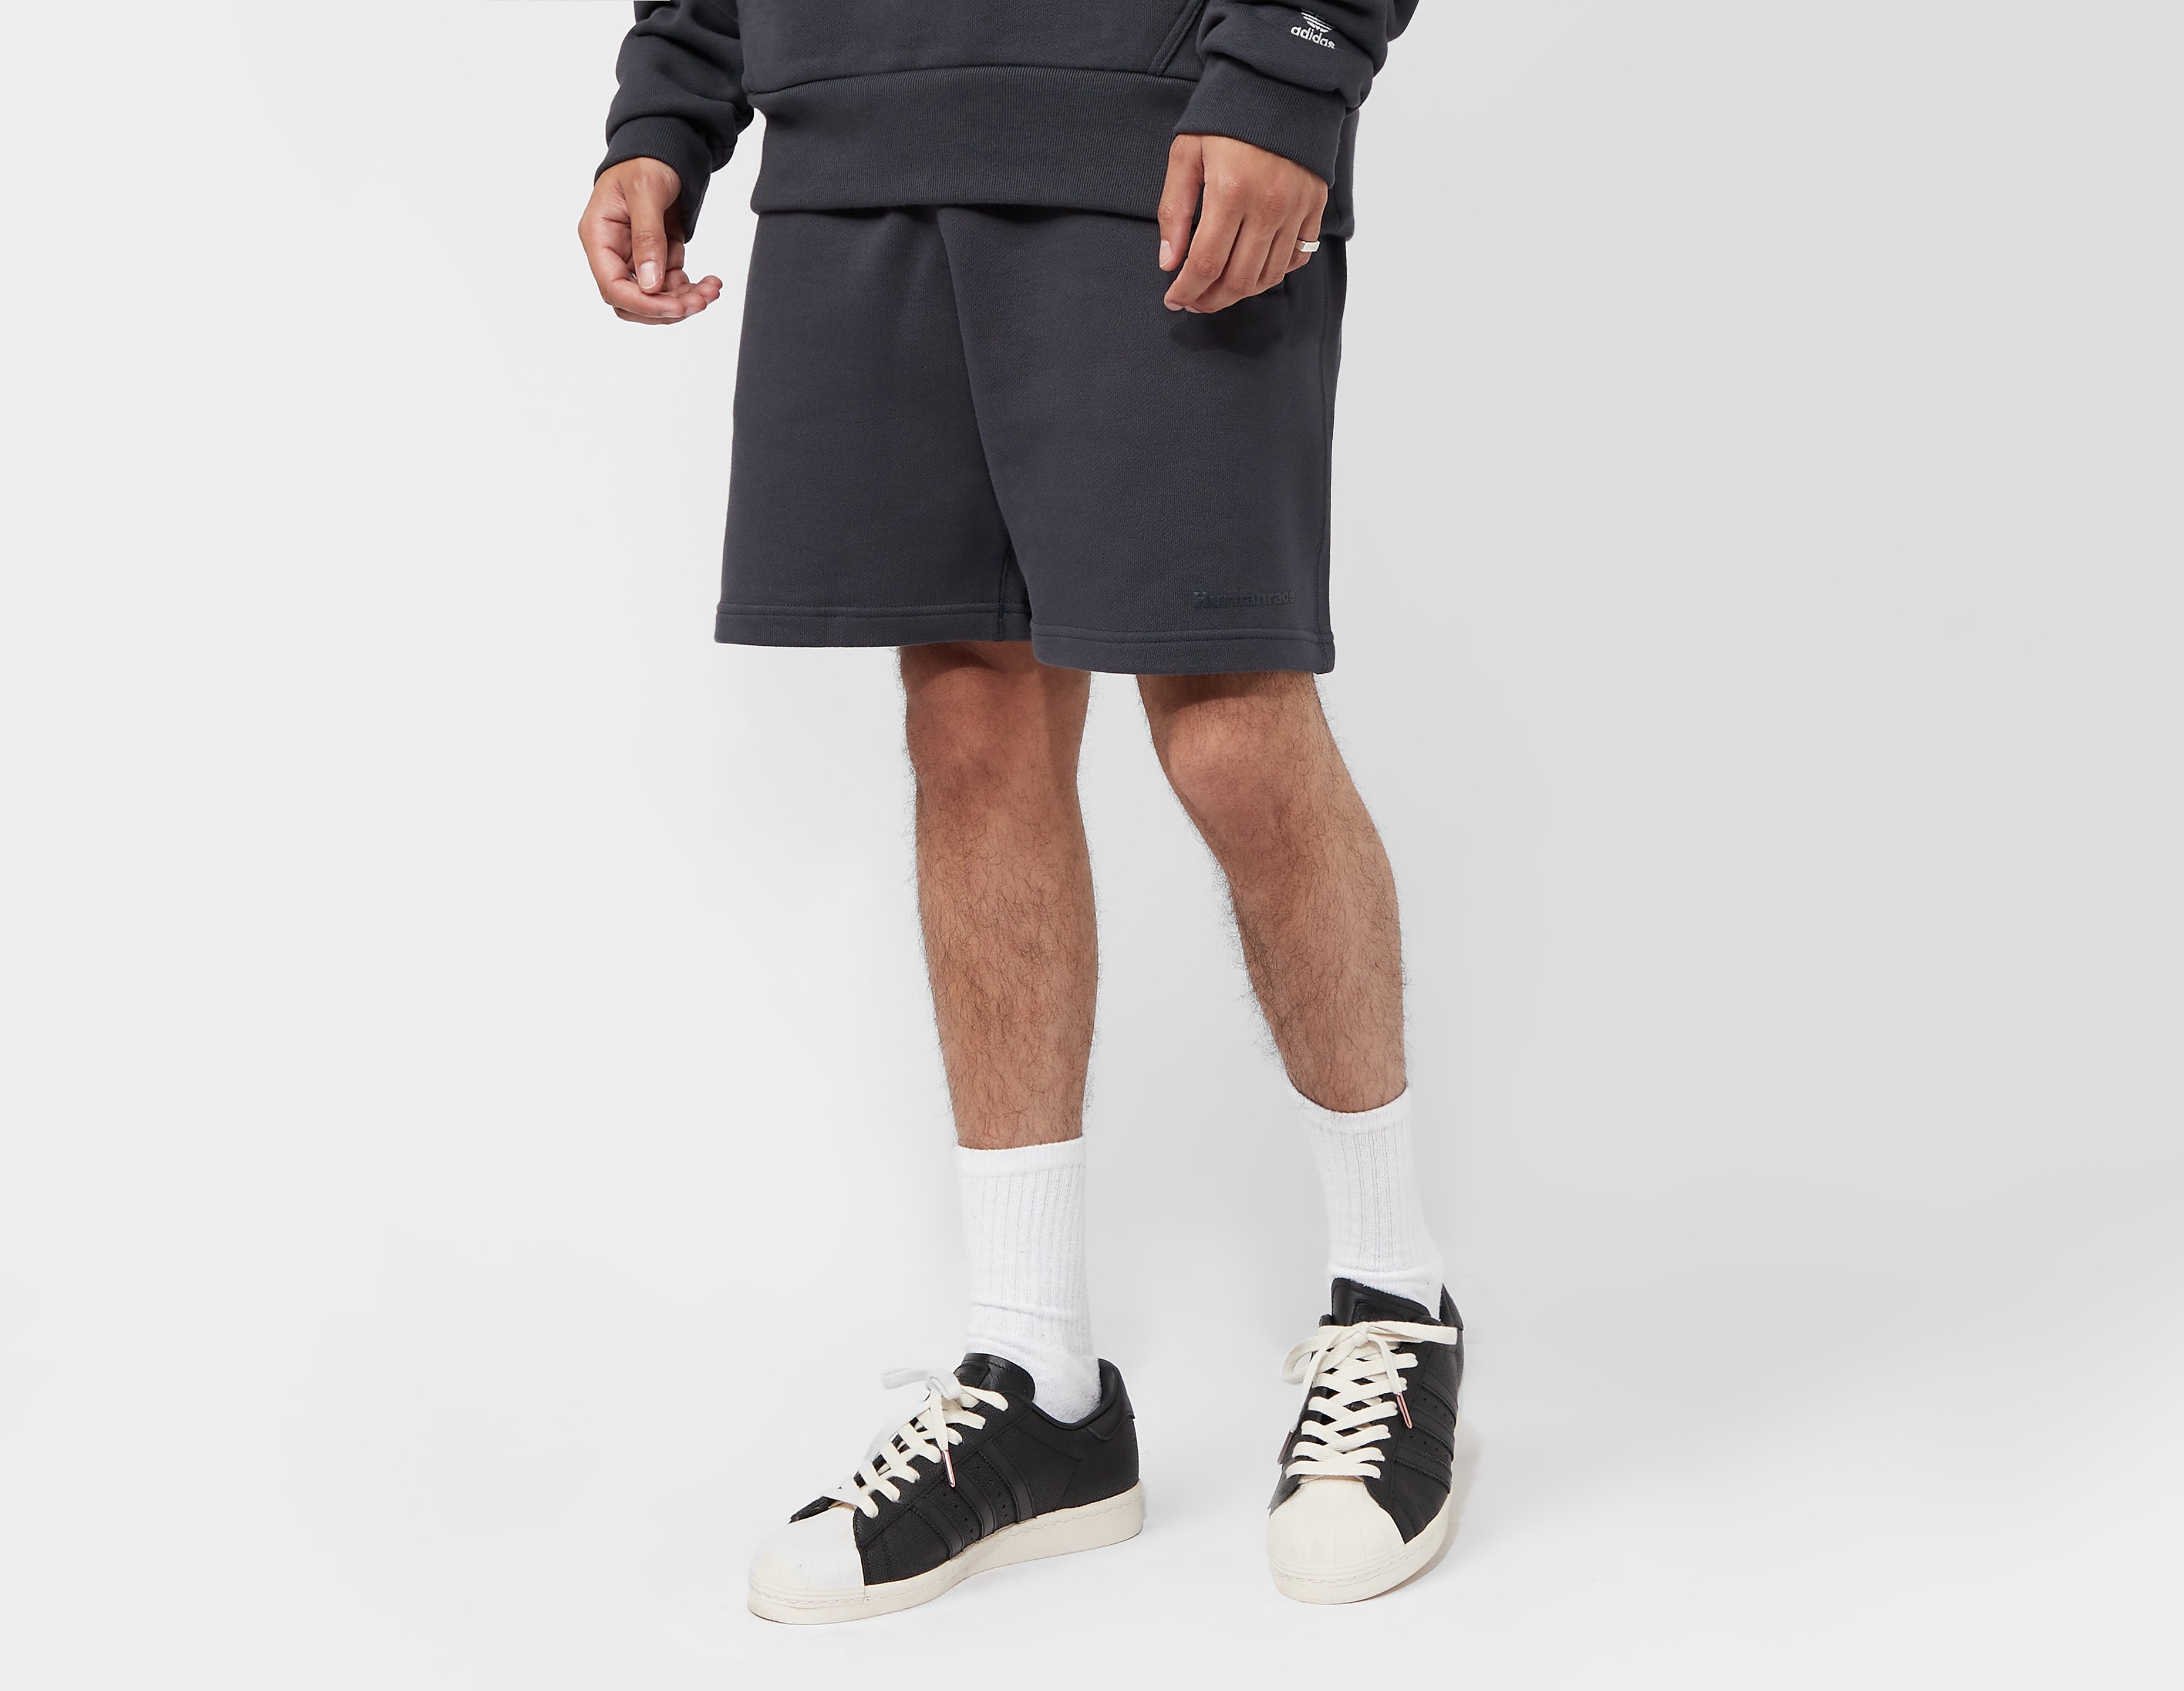 adidas Originals x Pharrell Williams Basics Shorts